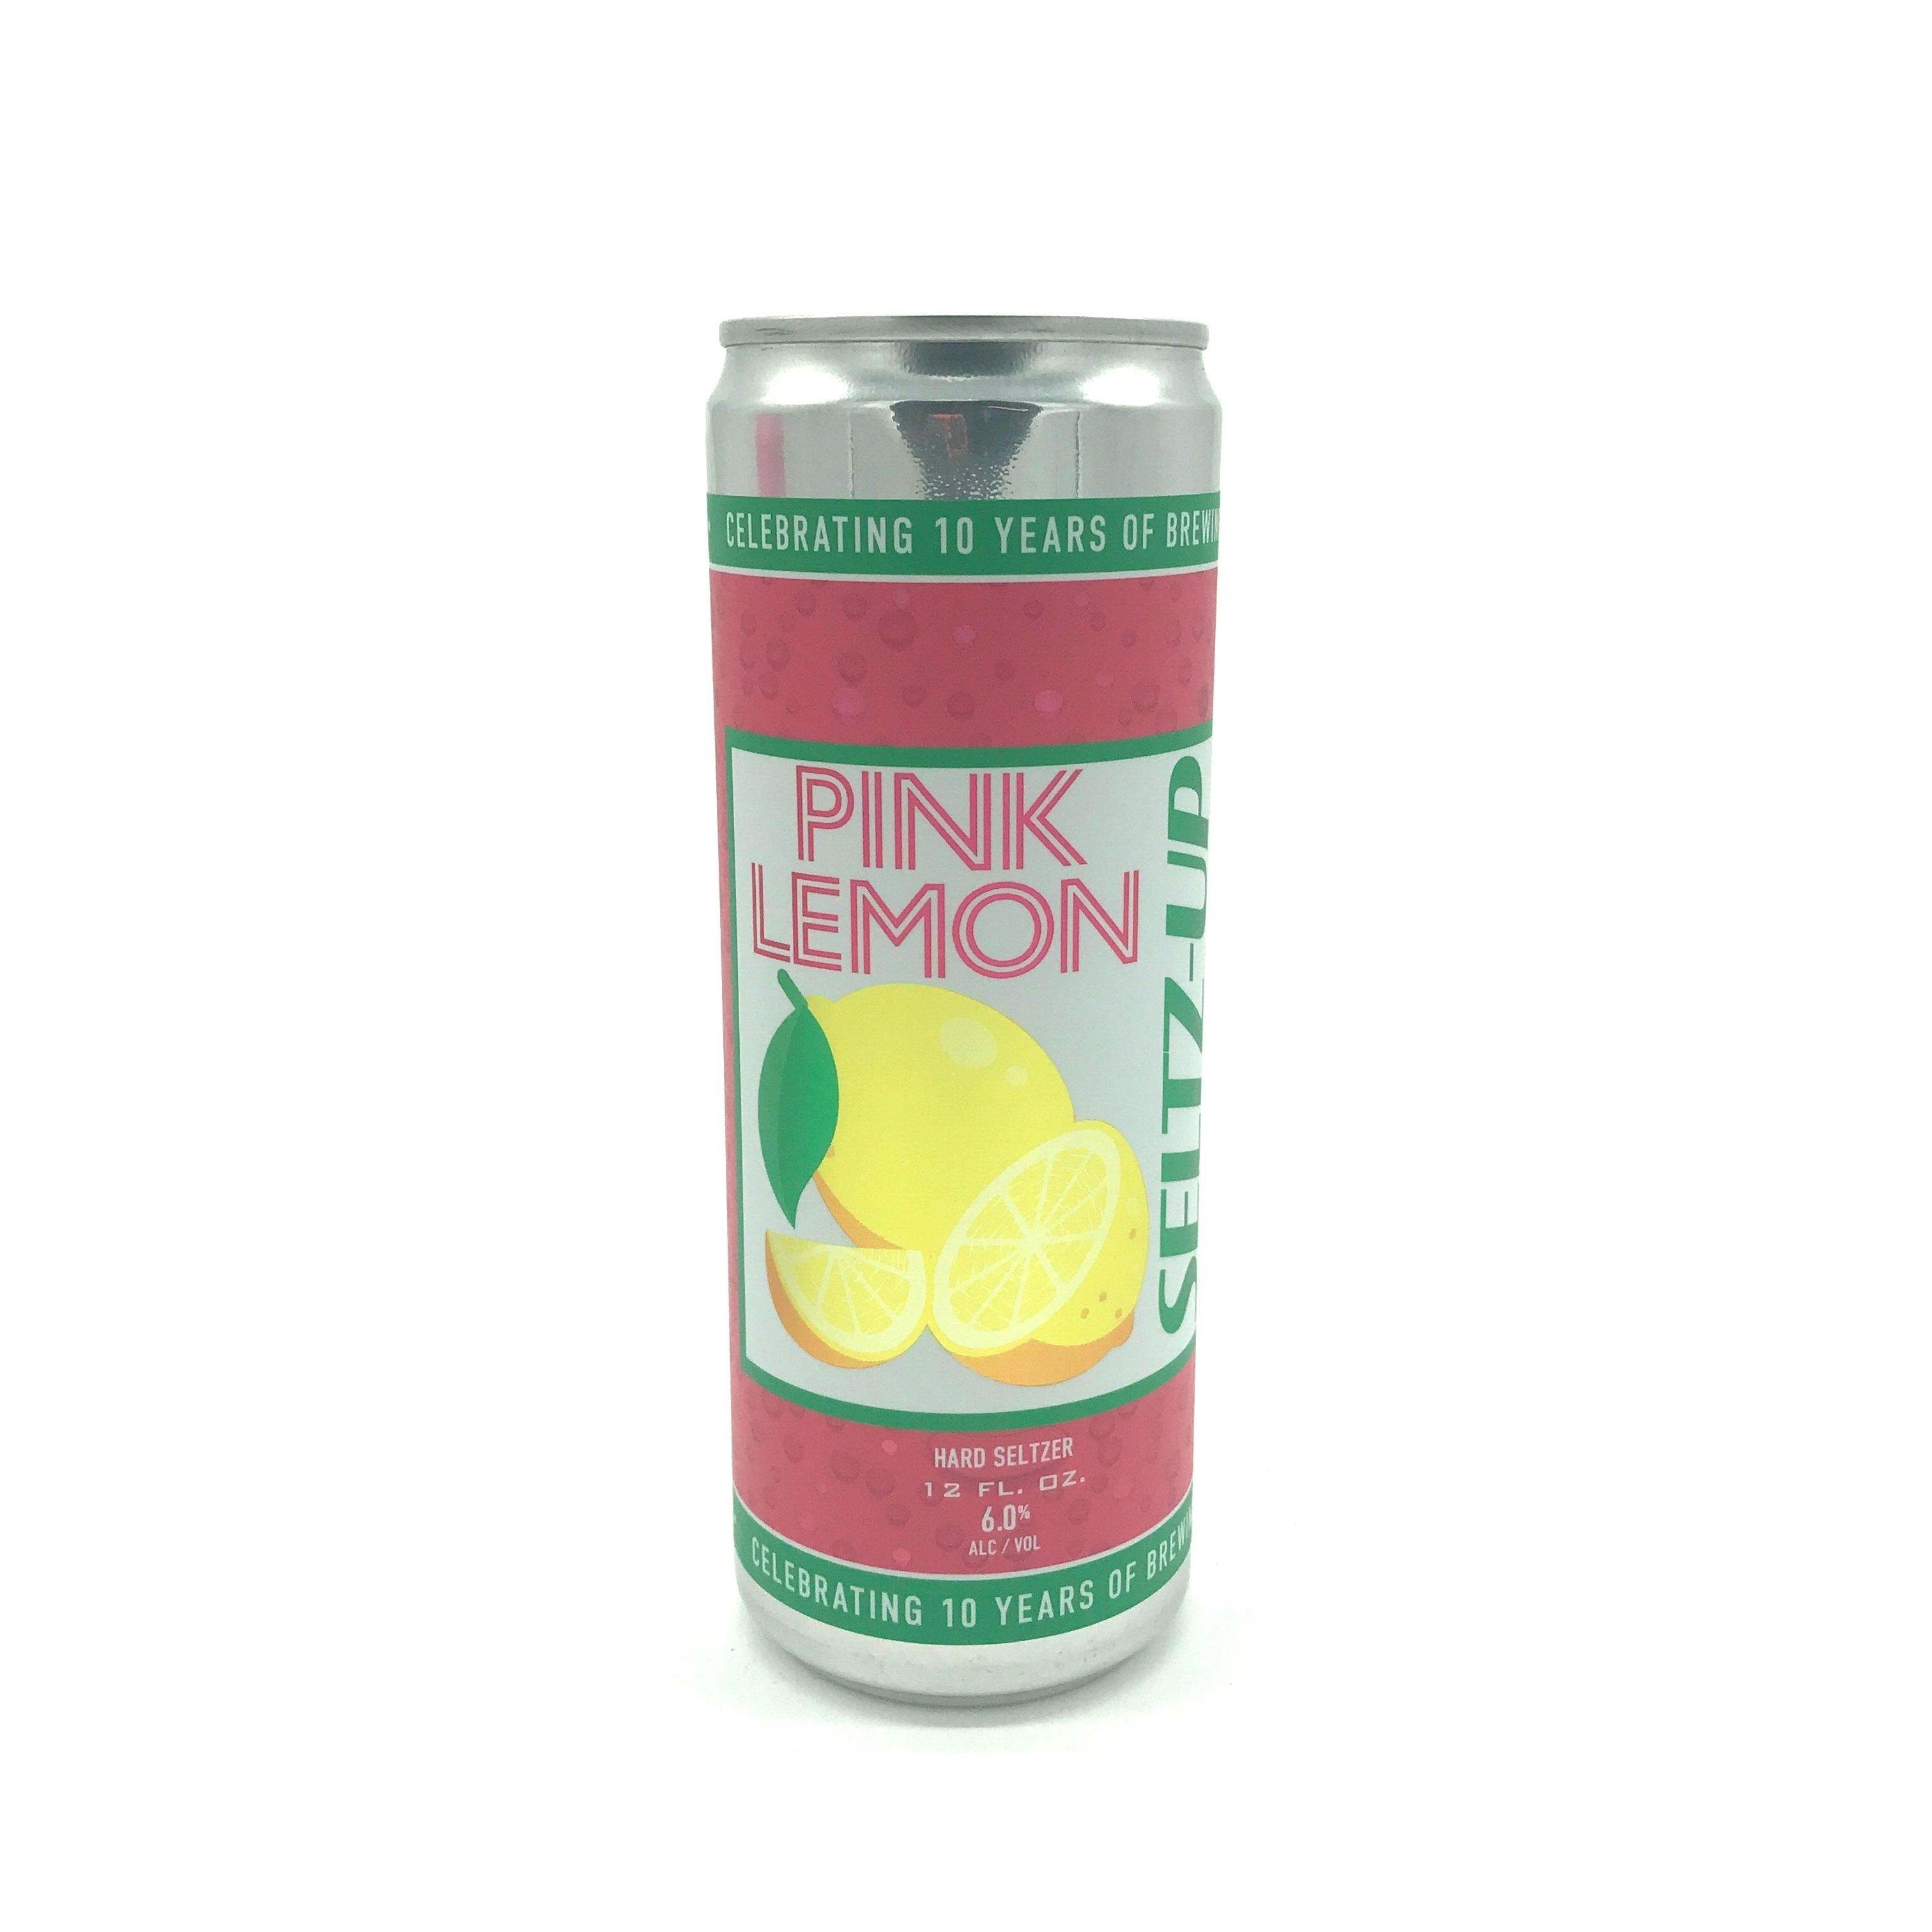 Penrose - Pink Lemon Seltz-Up (Hard Seltzer)